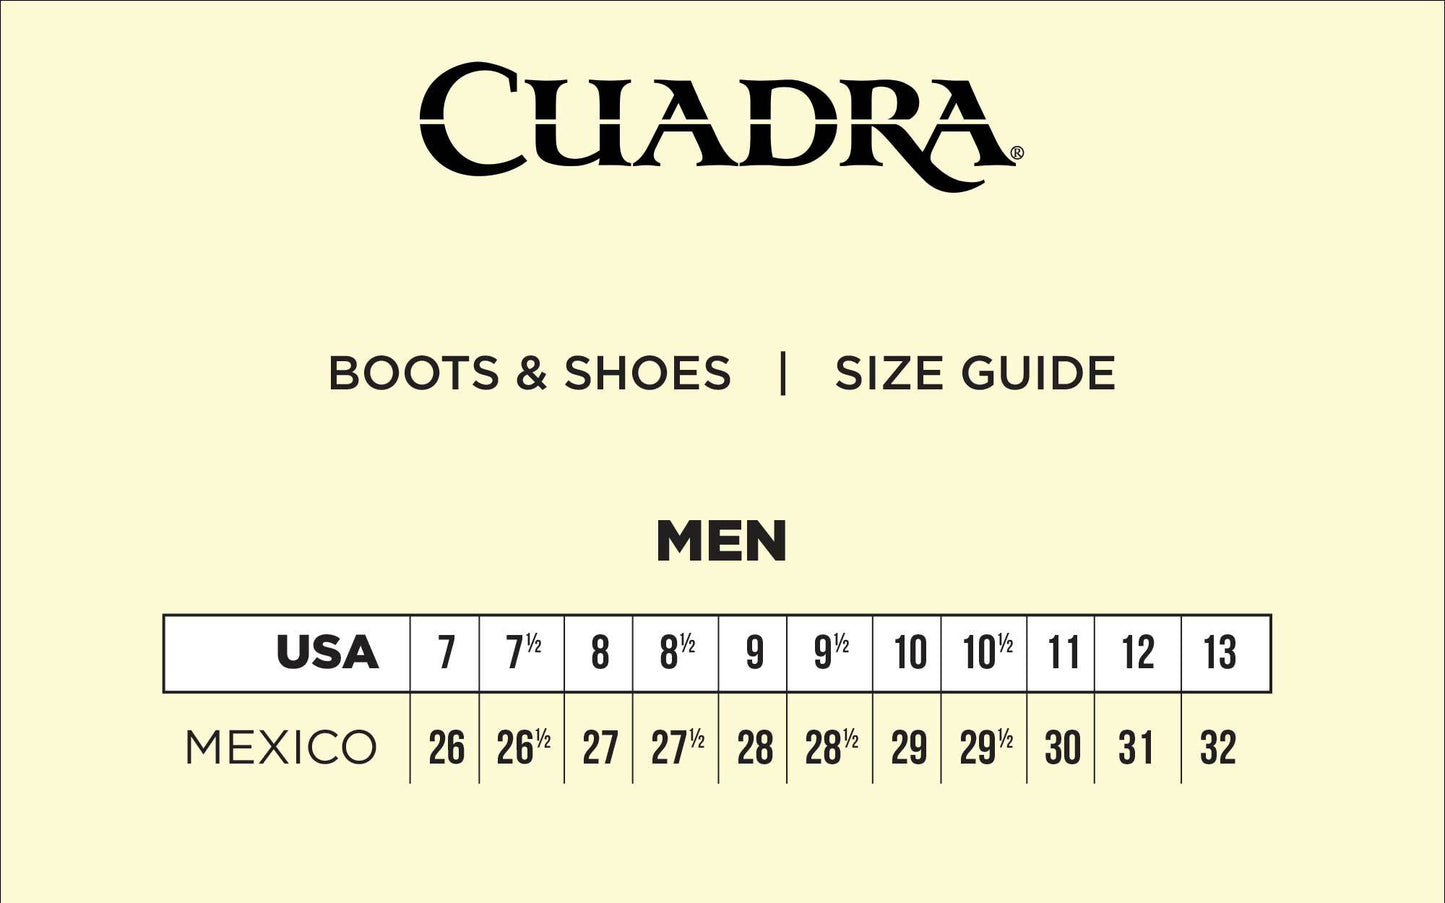 Cuadra's men's boots size guide 